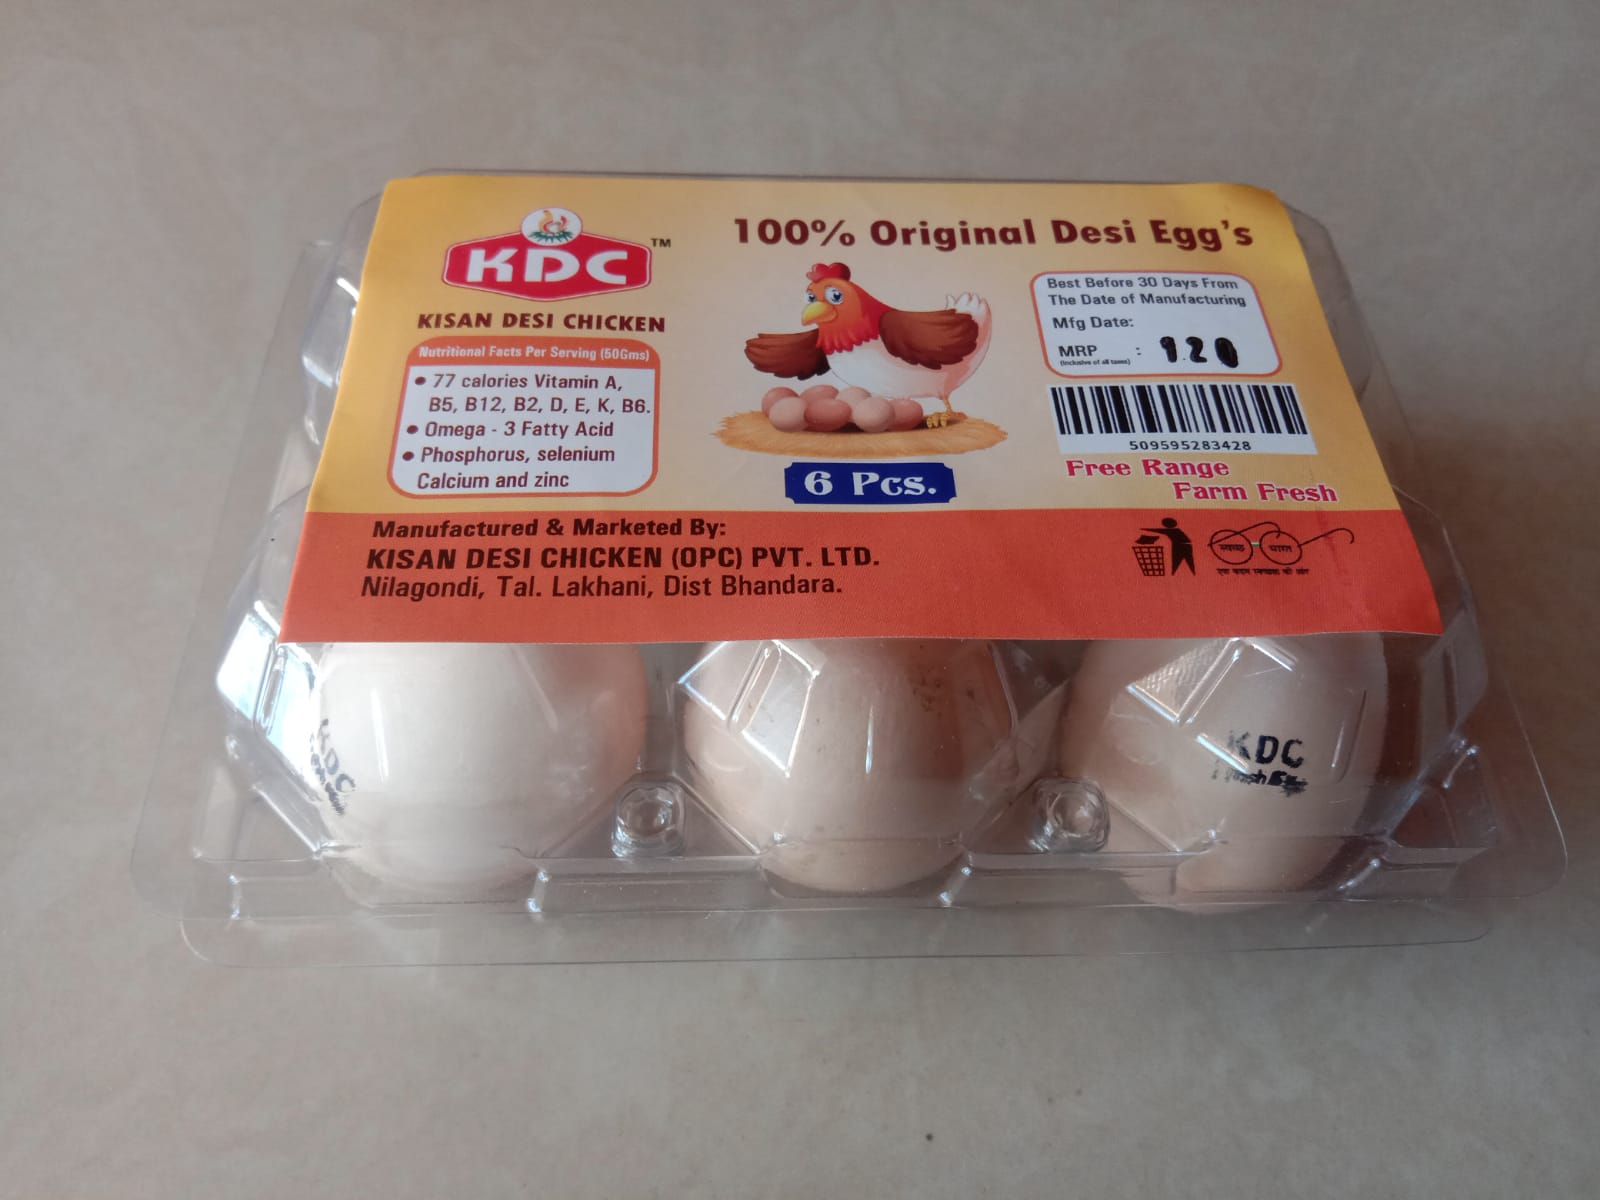 original desi eggs from KISAN DESI CHICKEN PVT. LTD.